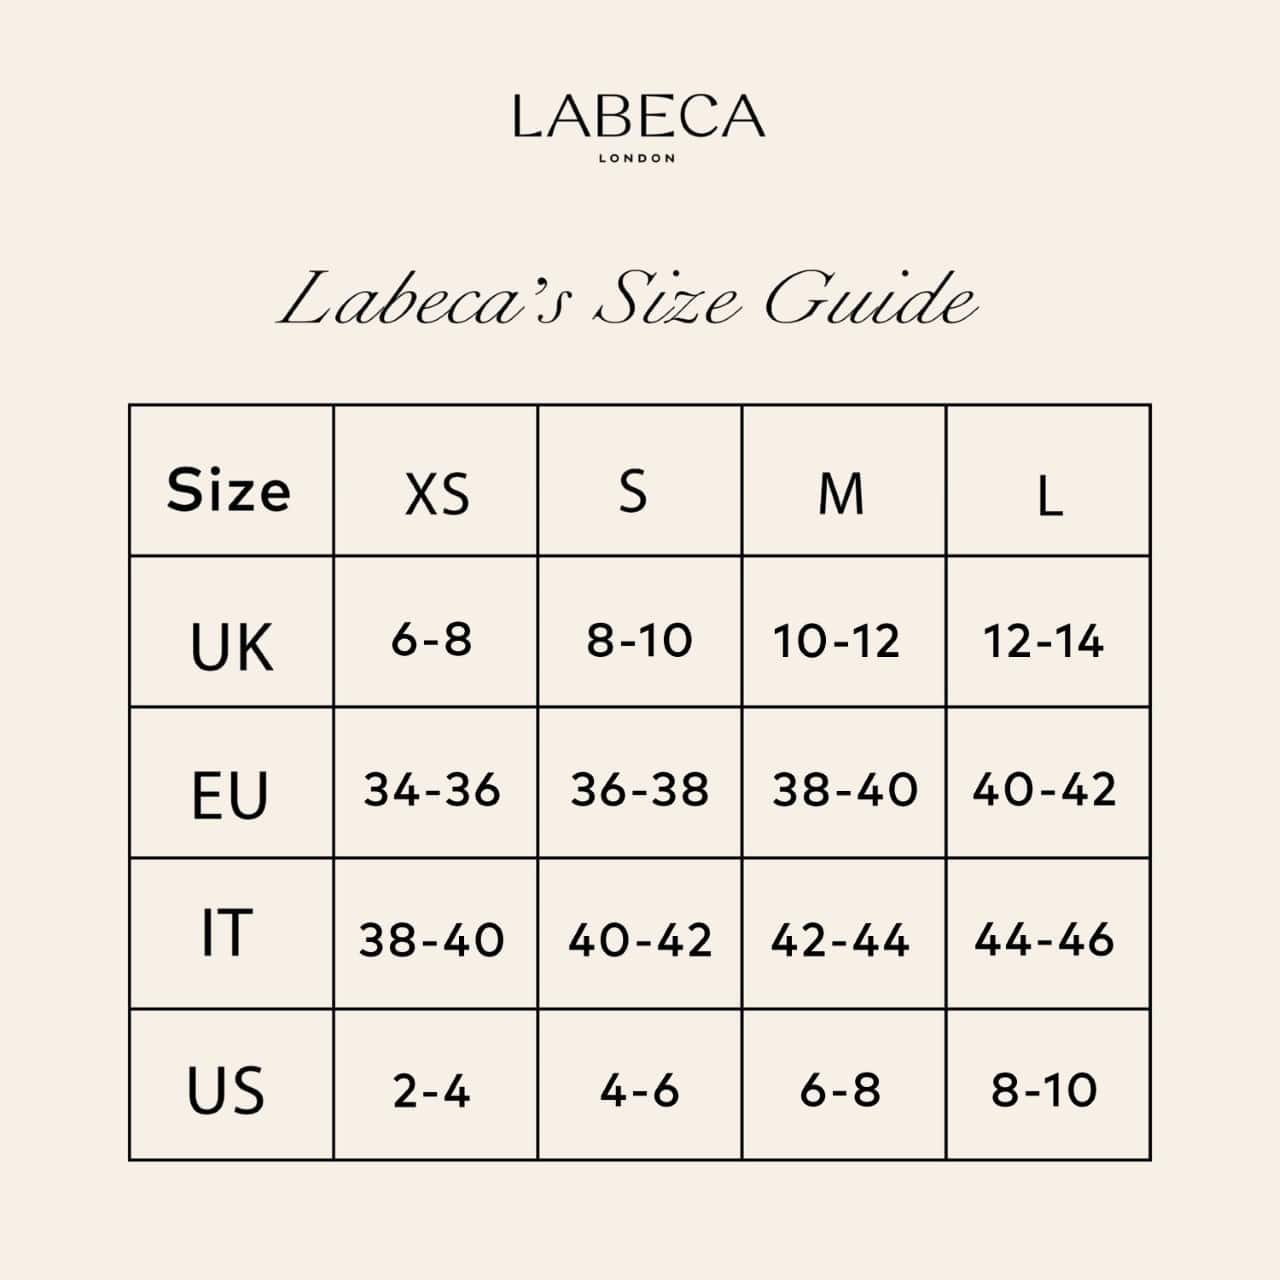 Labeca London Size Guide